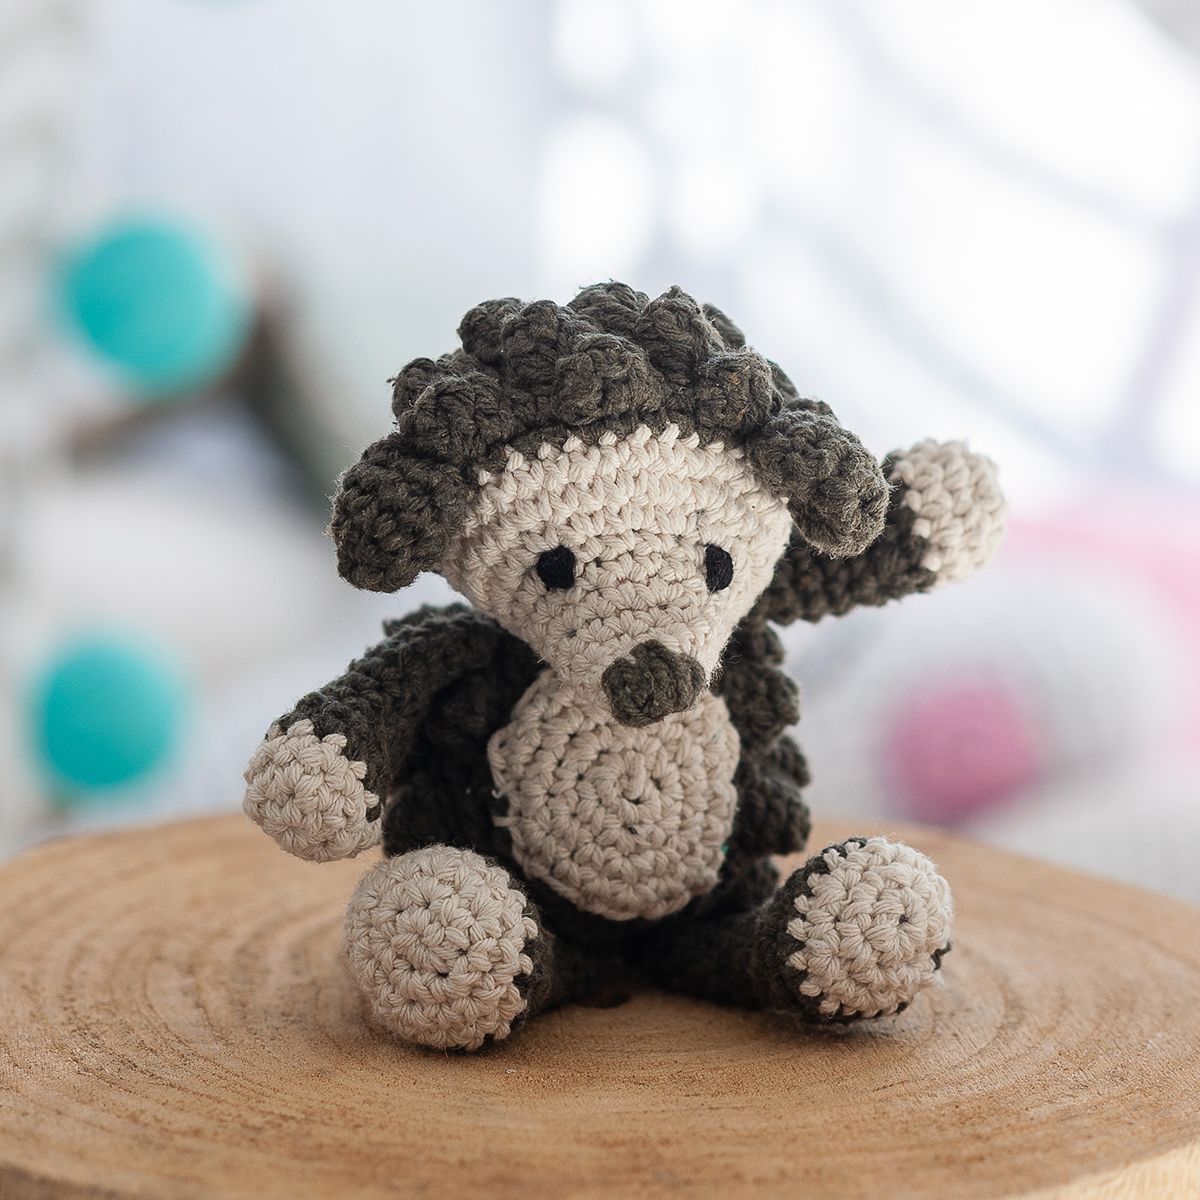 DIY Crochet Kit Hedgehog Hazel Eco Barbante